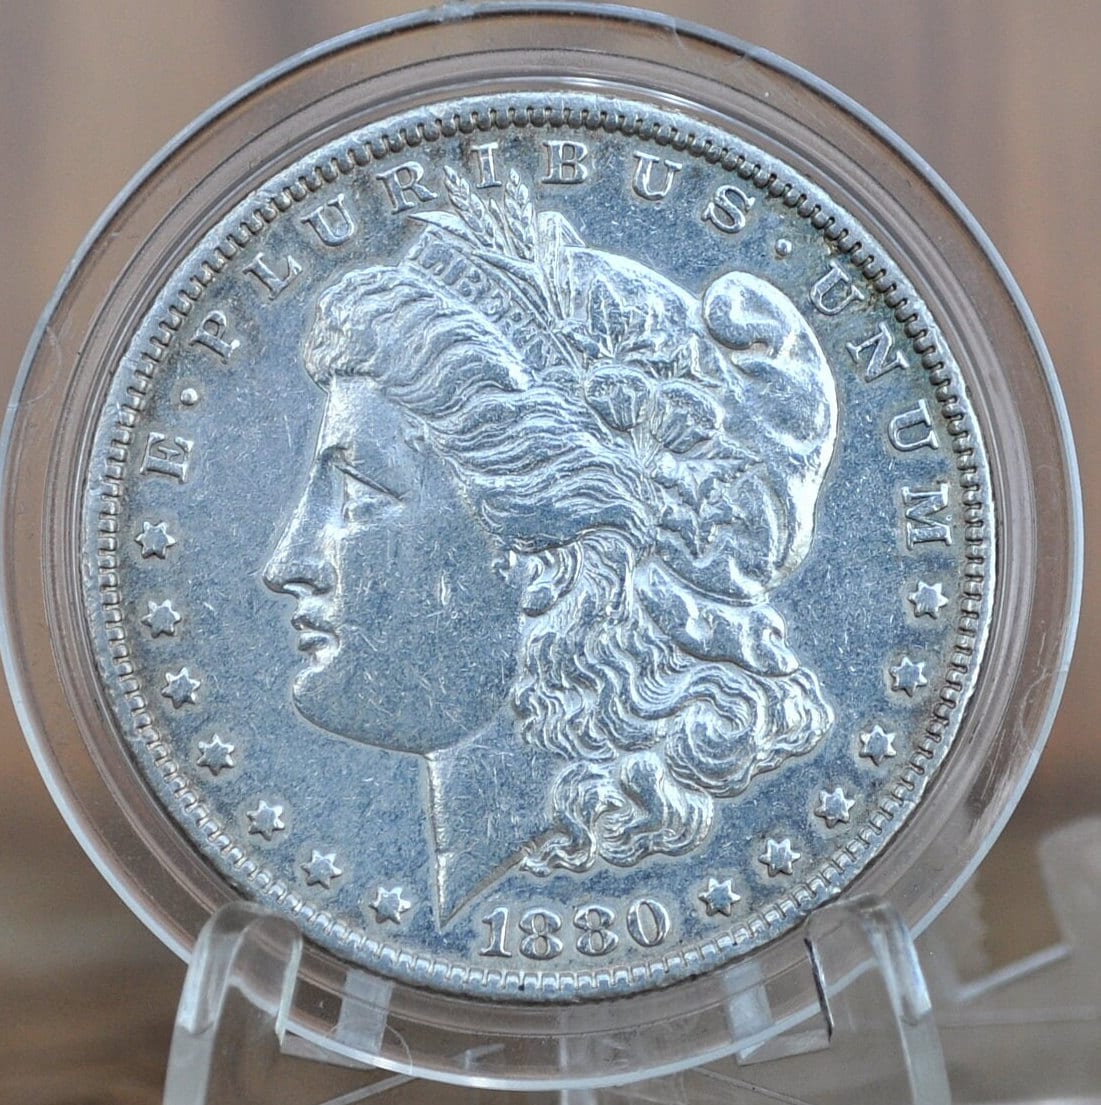 1880-O Morgan Silver Dollar - Choose by Grade / Condition - New Orleans Mint - Silver Dollar 1880 O Morgan Dollar, Great Date